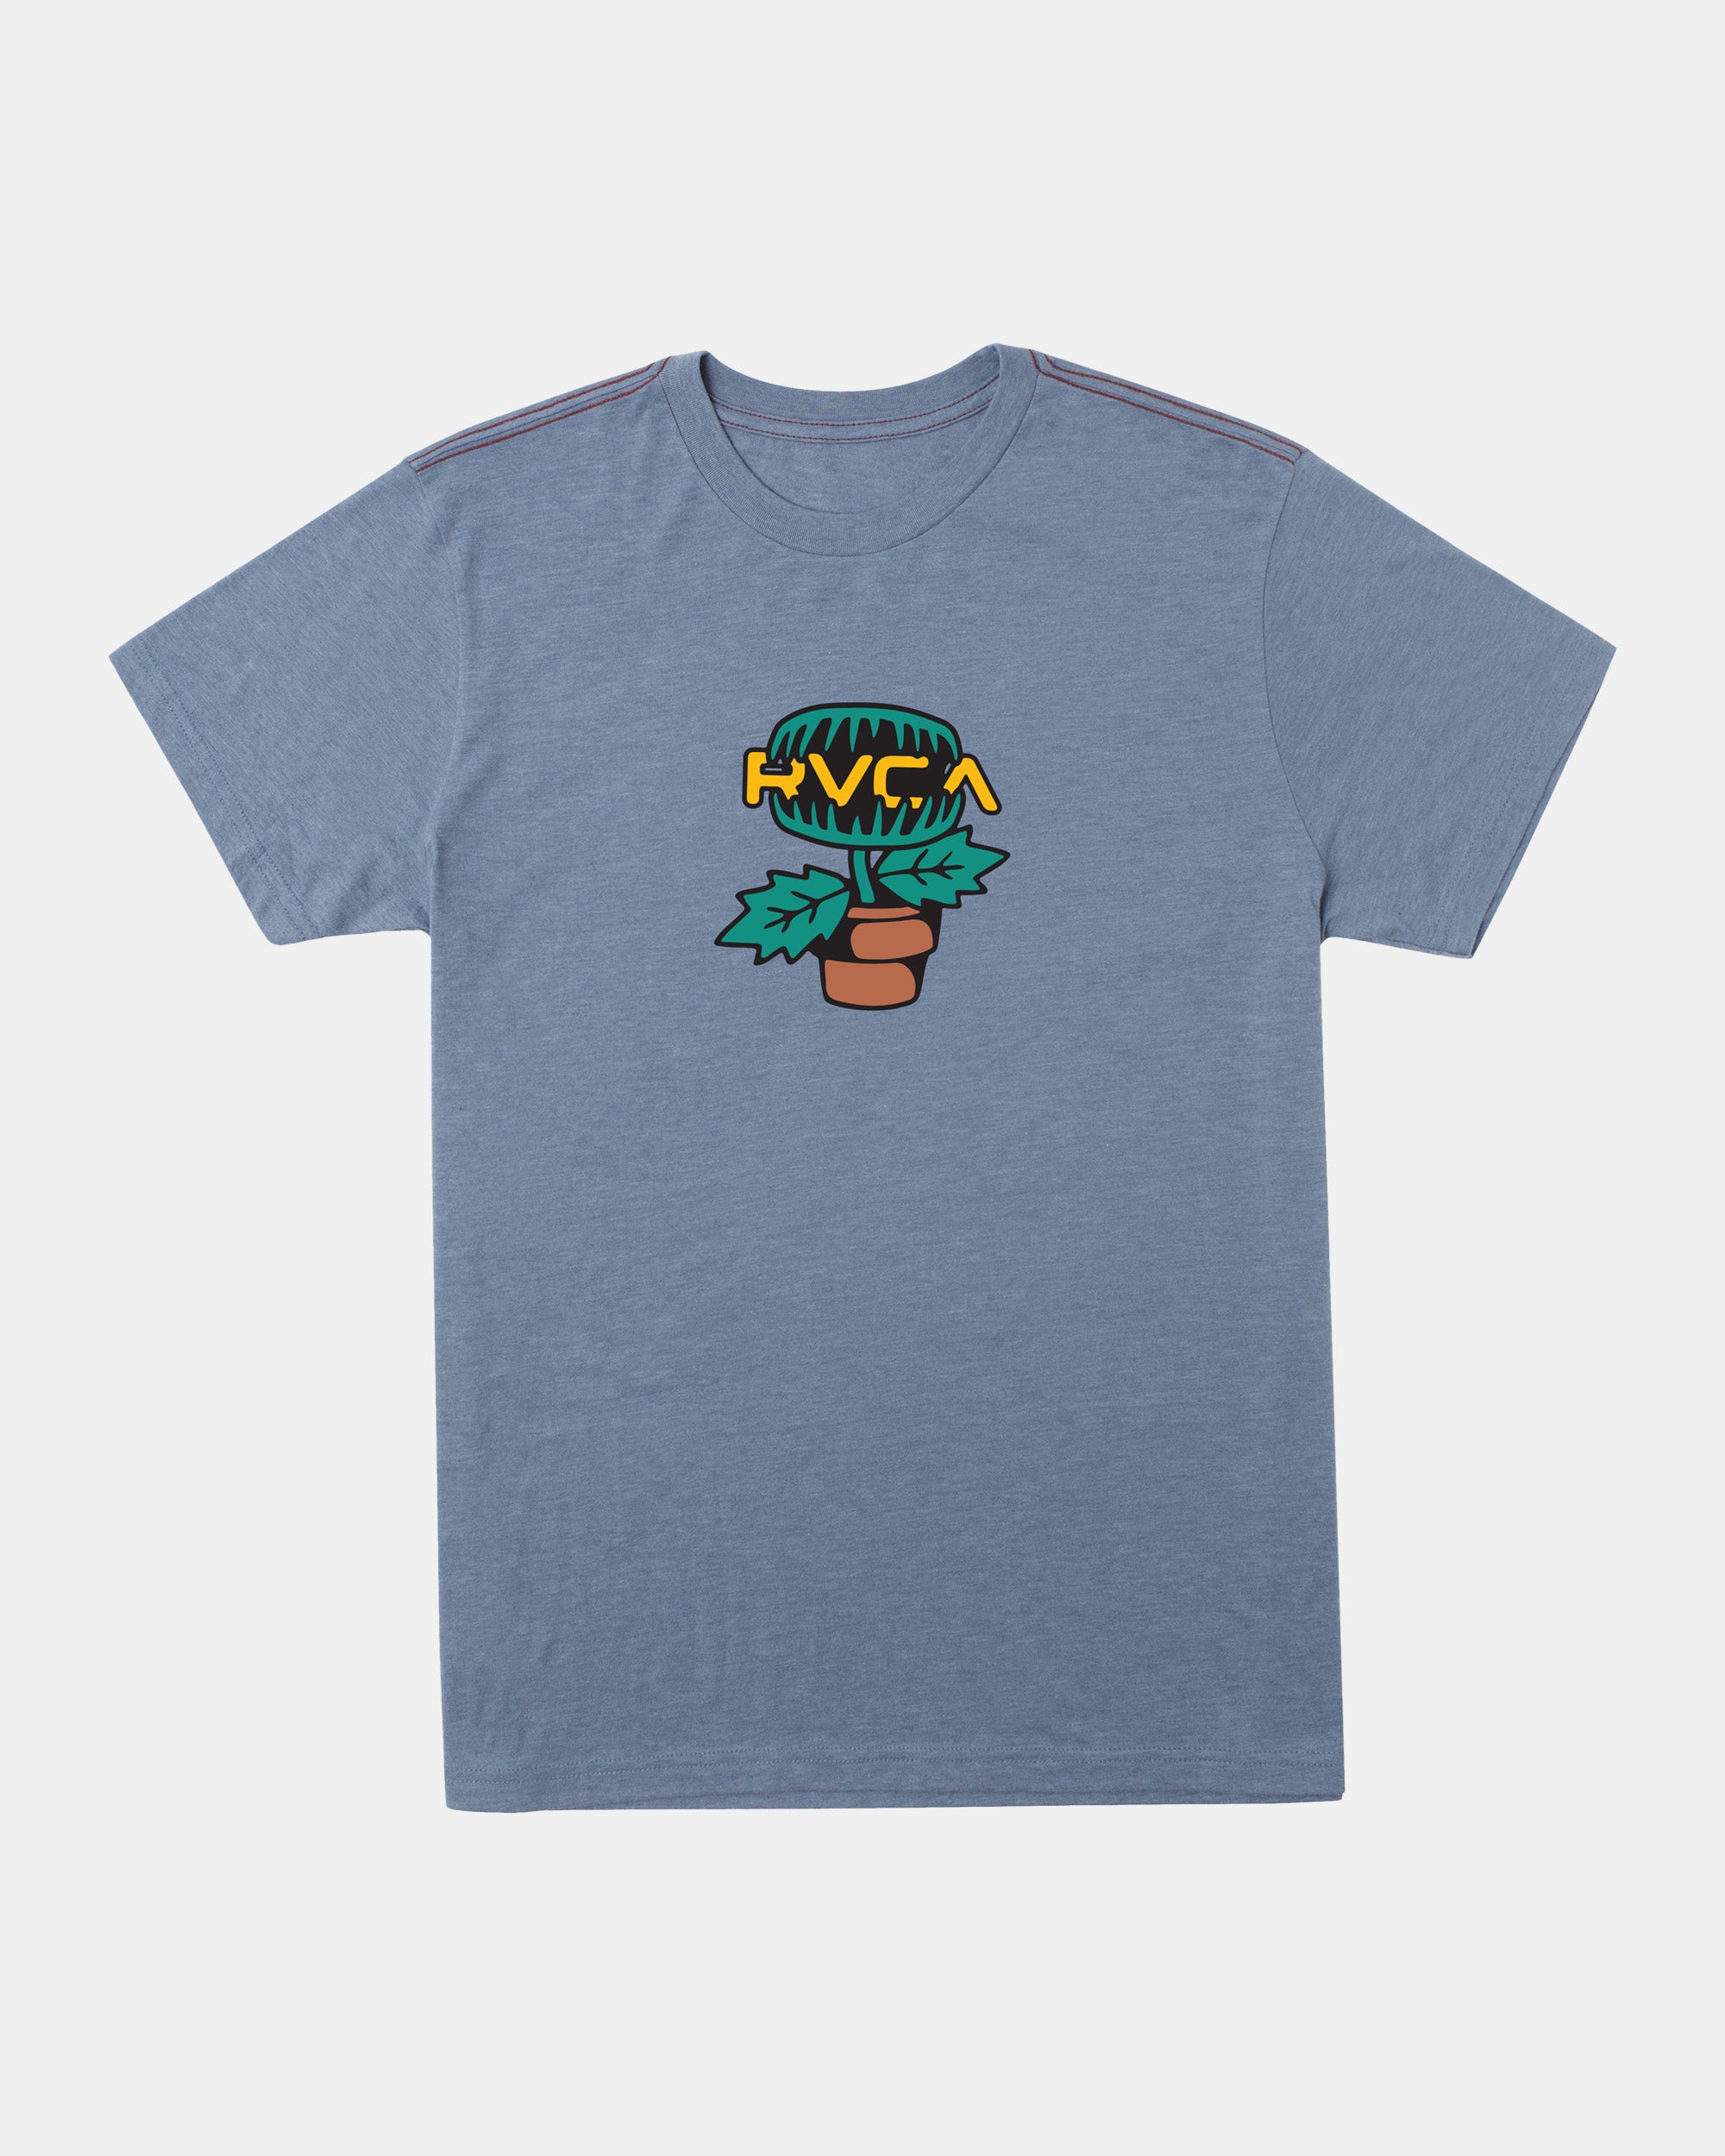 Boys RVCA Flytrap T-Shirt - Industrial Blue